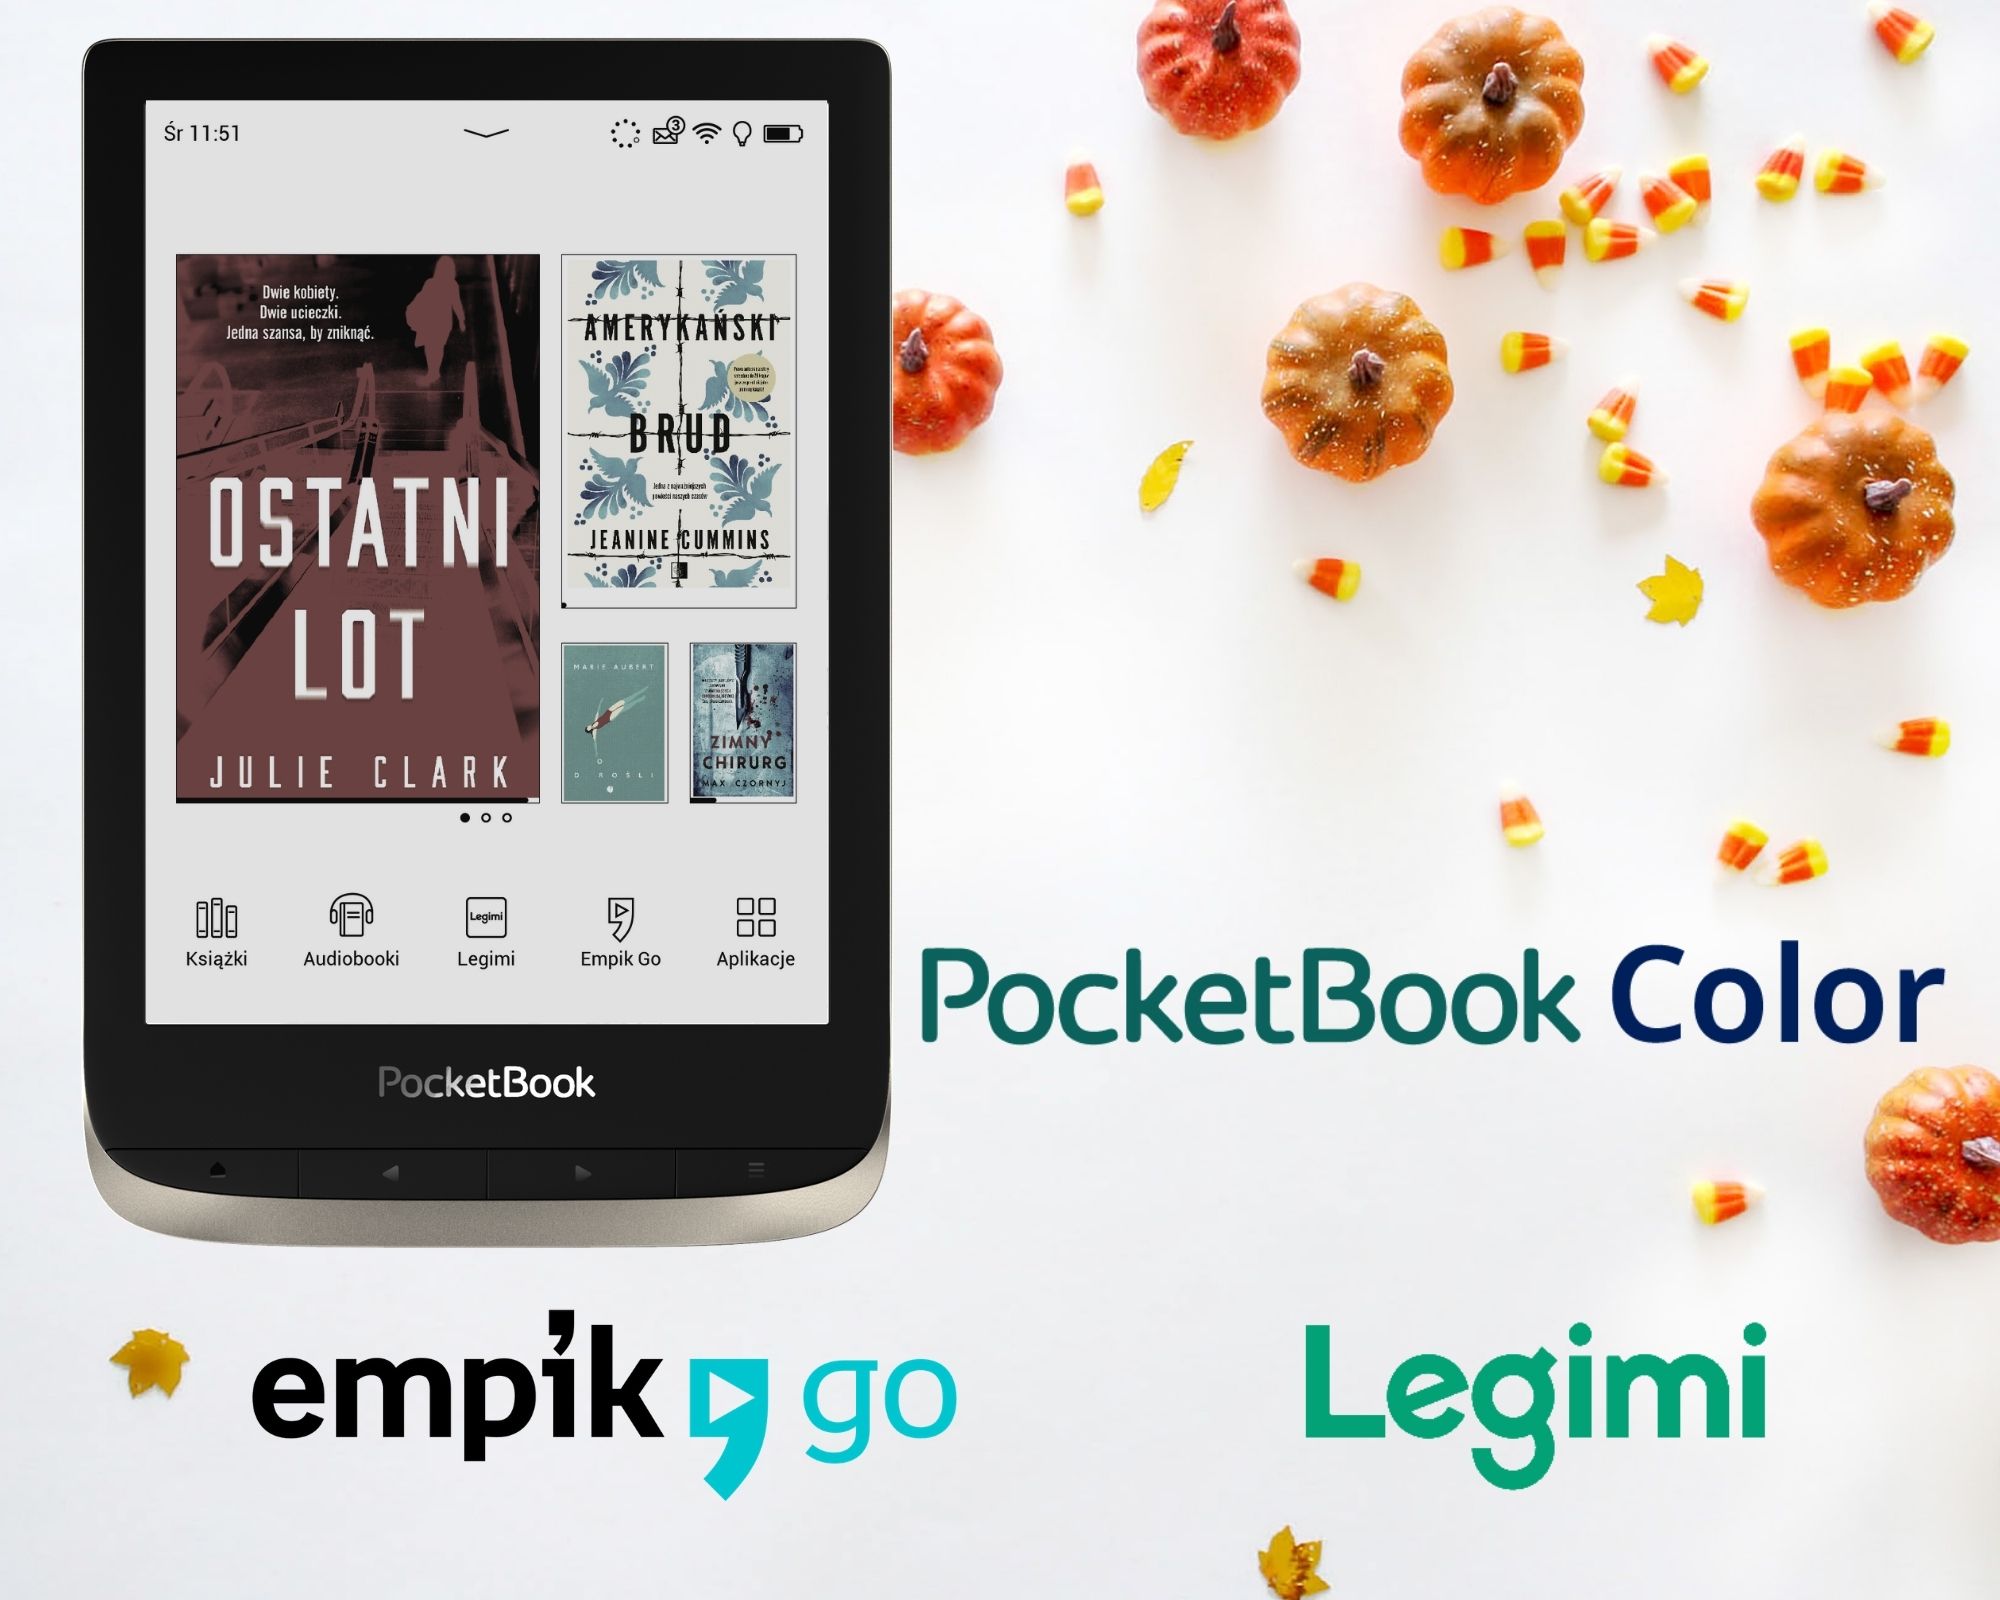 Empik Go i Legimi na PocketBook color